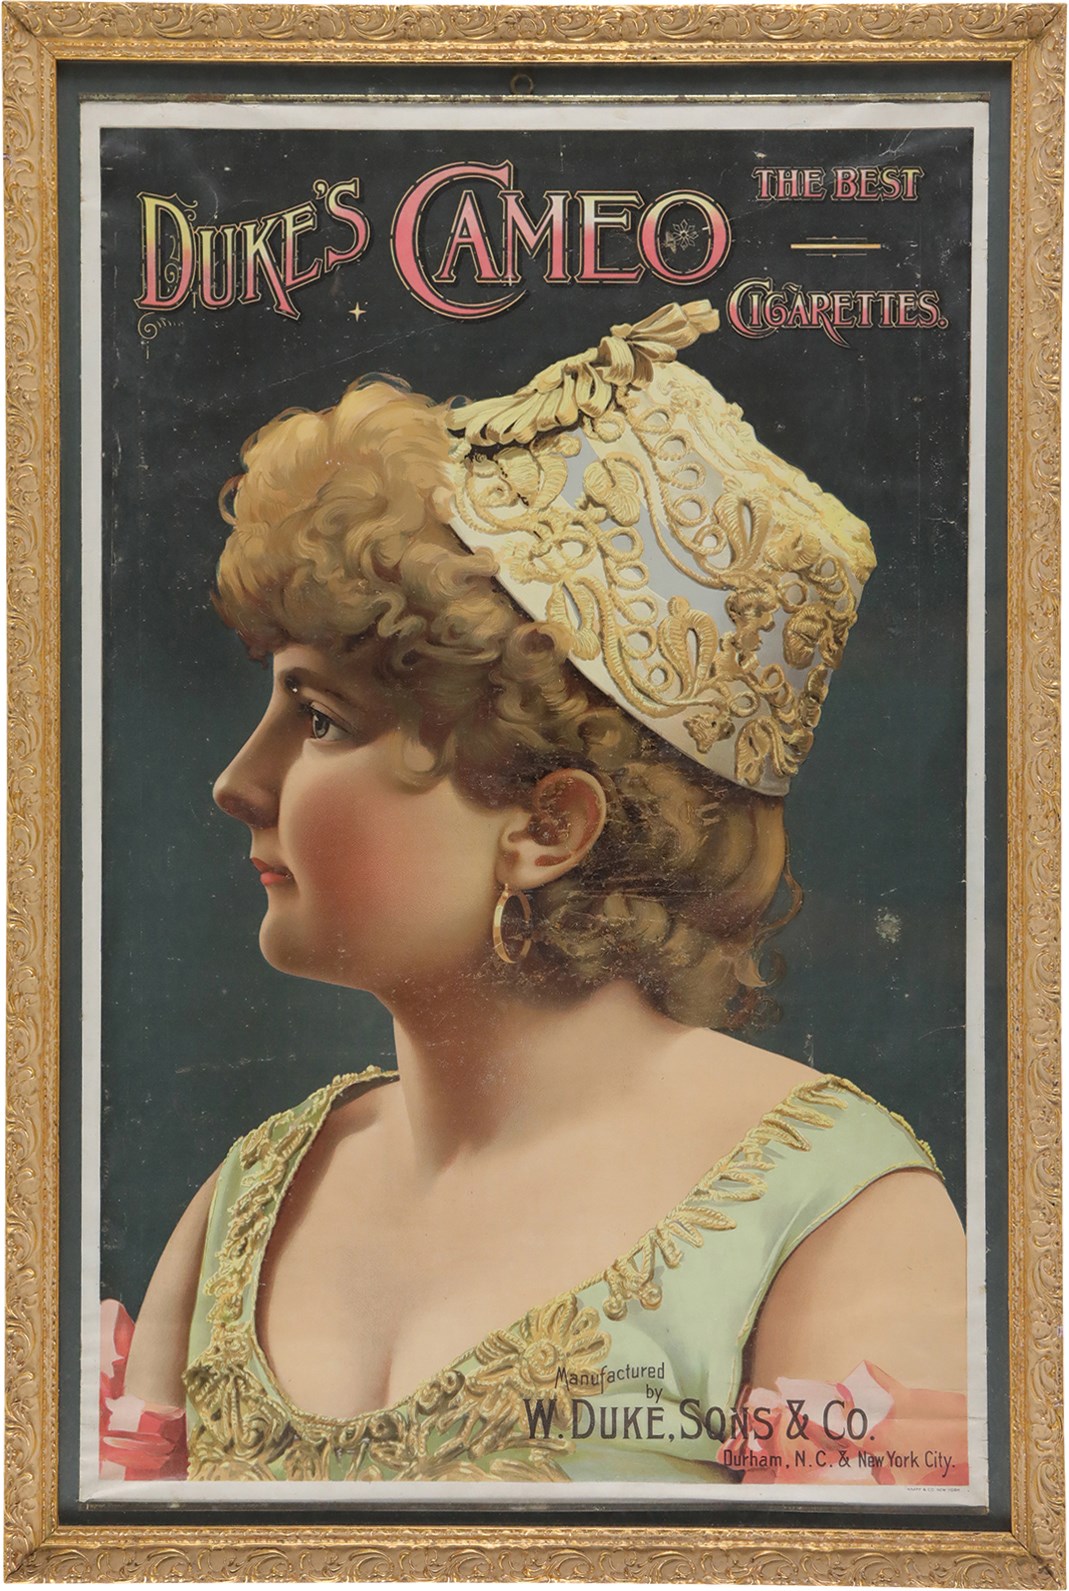 - Circa 1880s Duke Cameo Cigarettes Advertising Poster